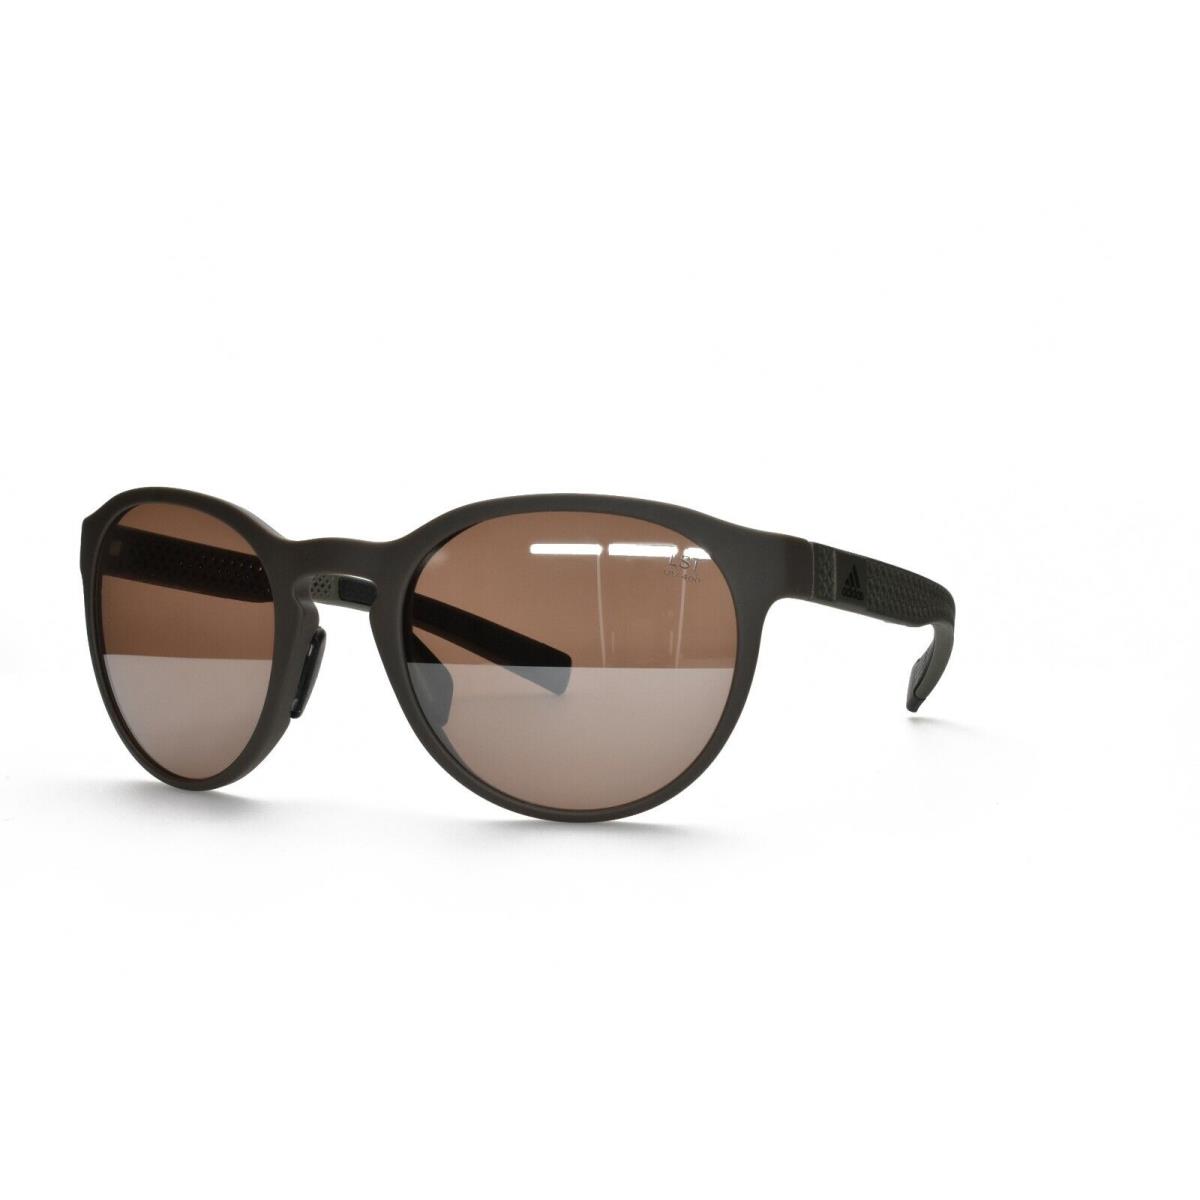 Adidas Sunglasses by Silhouet 3D Print Frame Proshift 38 75 5500 52 X Khaki - Frame: Multicolor, Lens: Brown